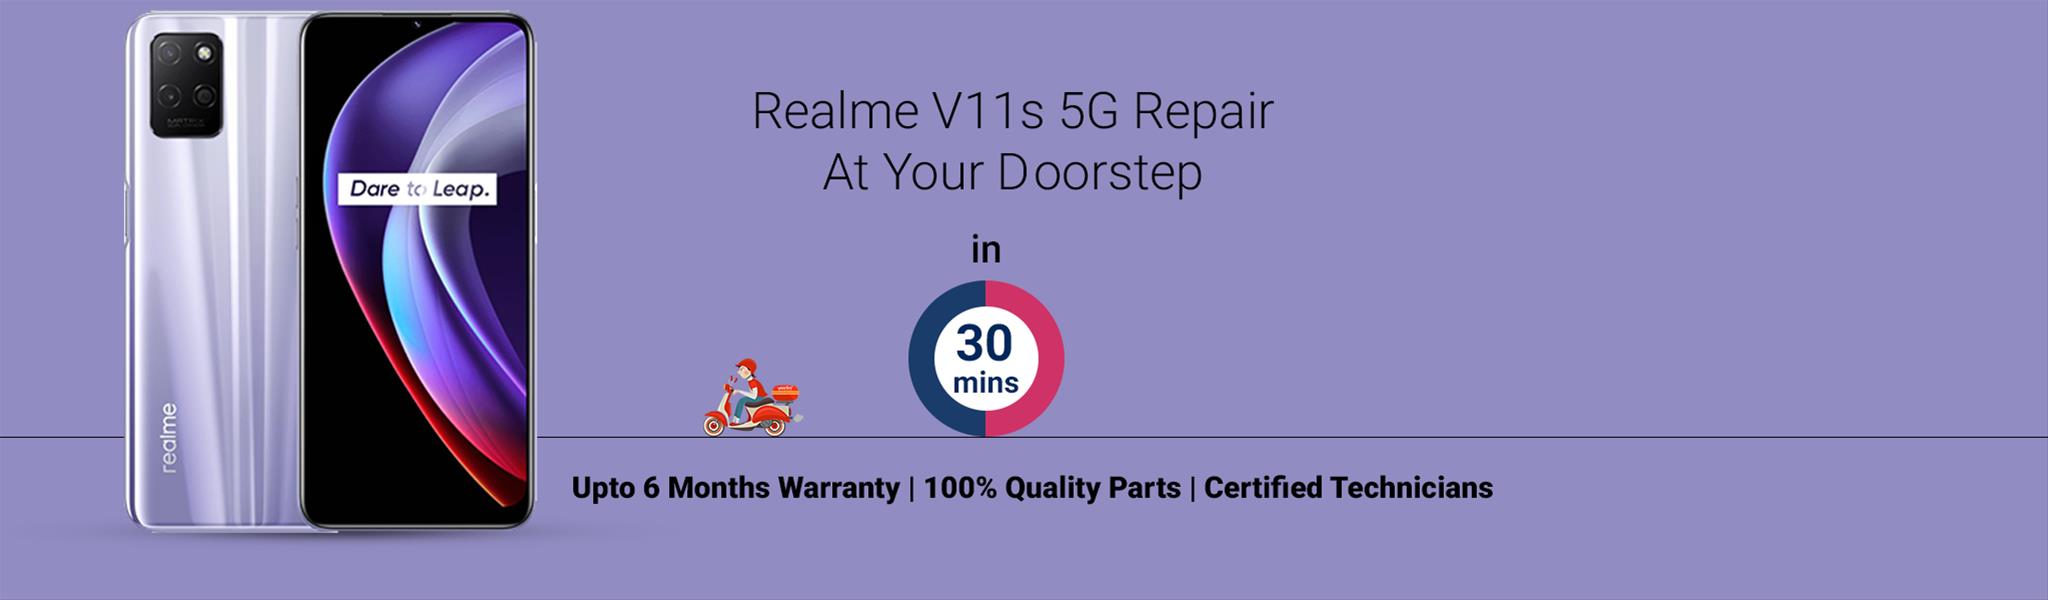 realme-v11s-5g-repair.png